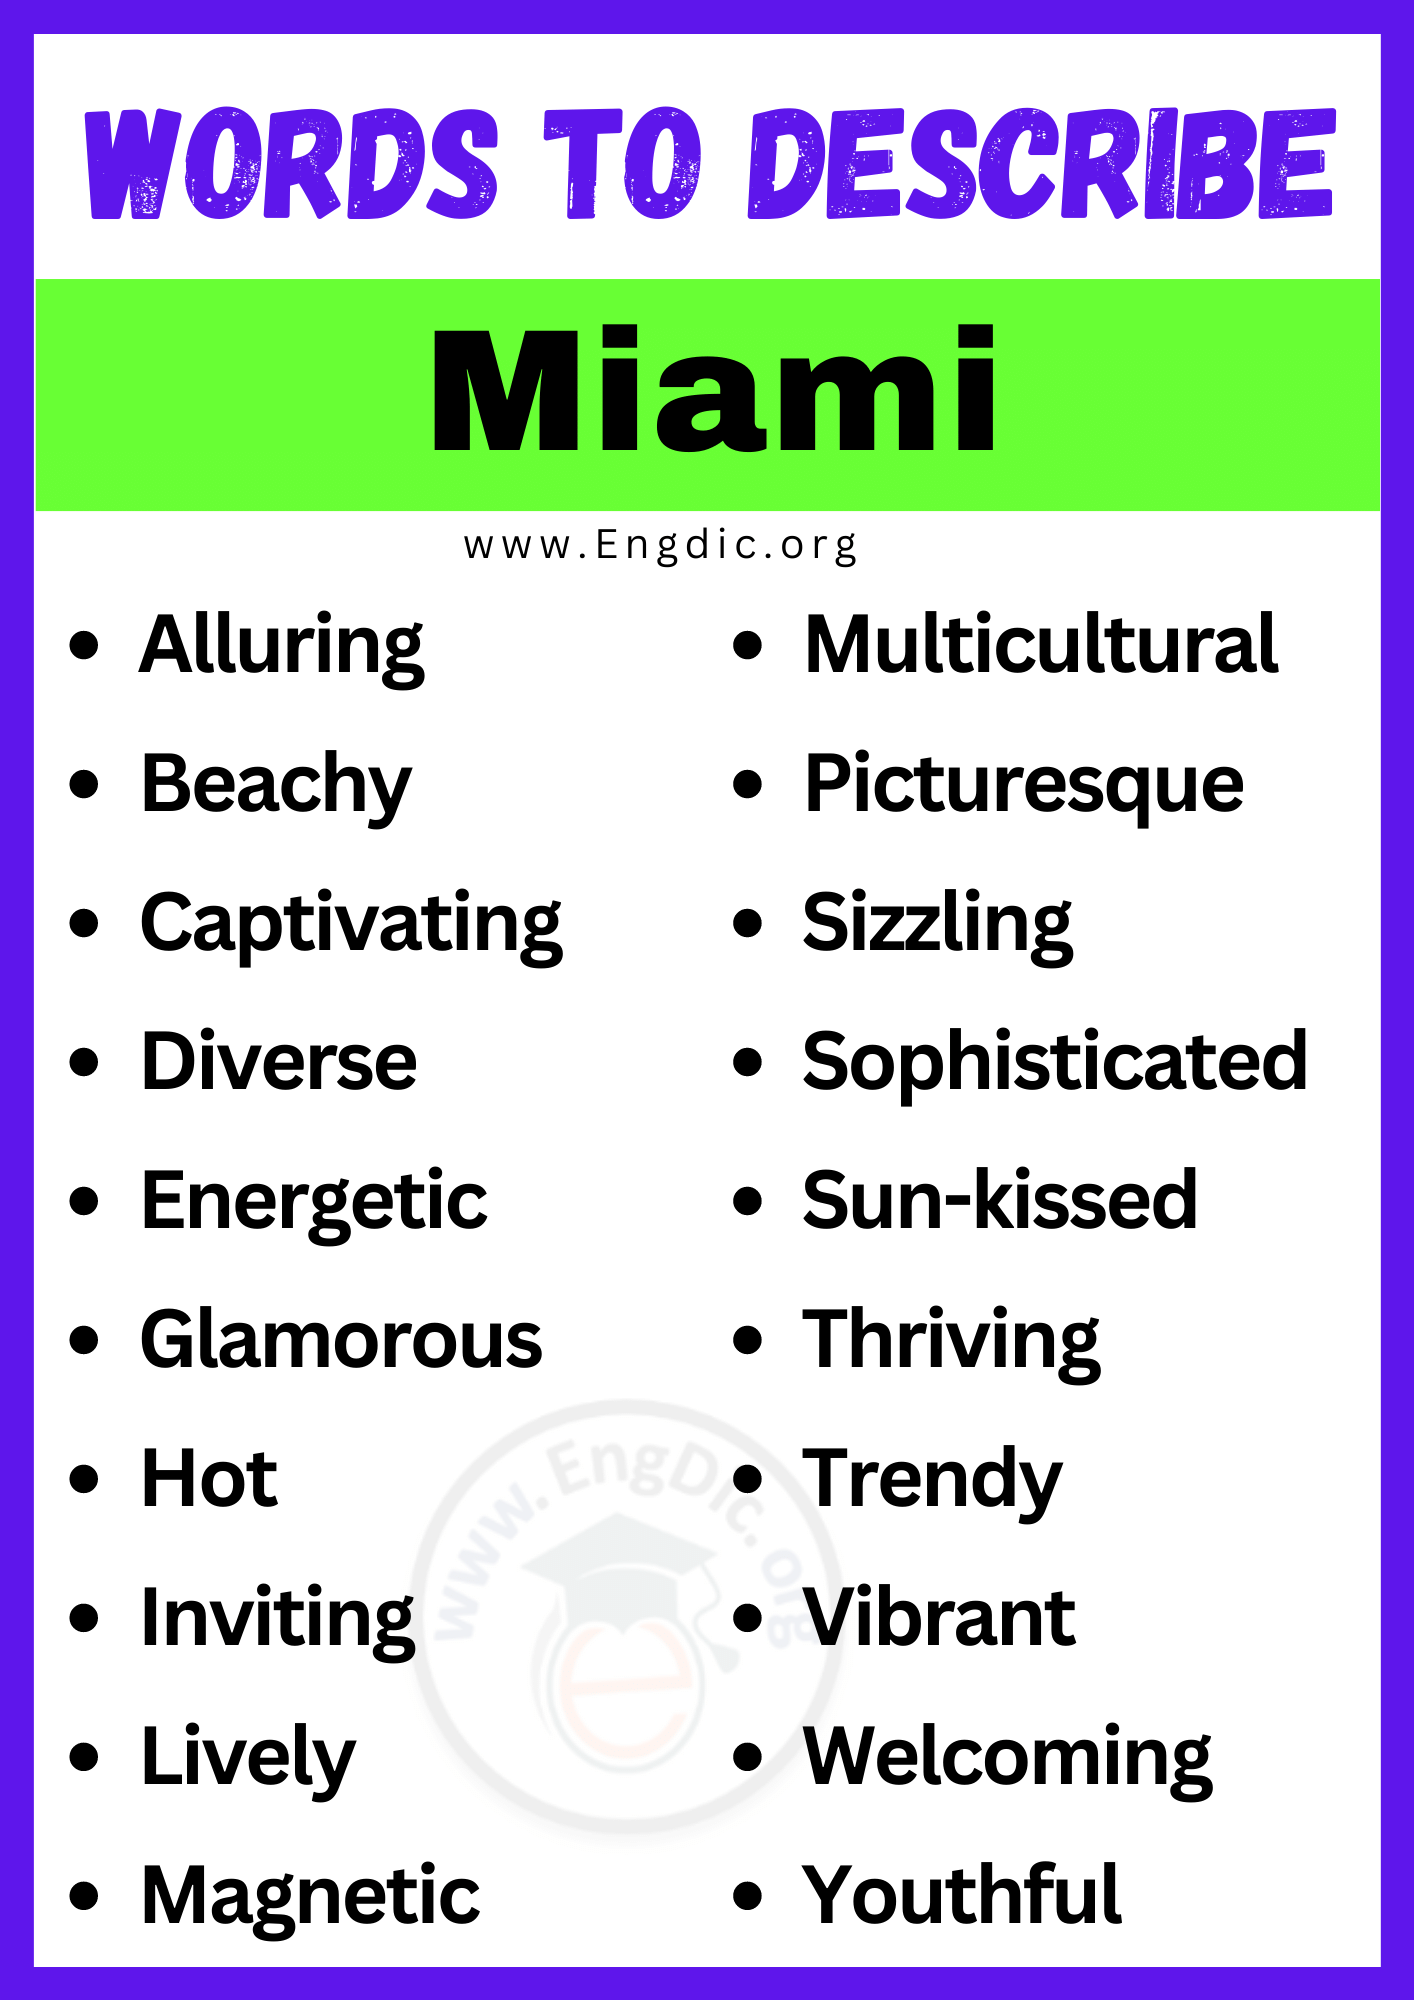 Words to Describe Miami